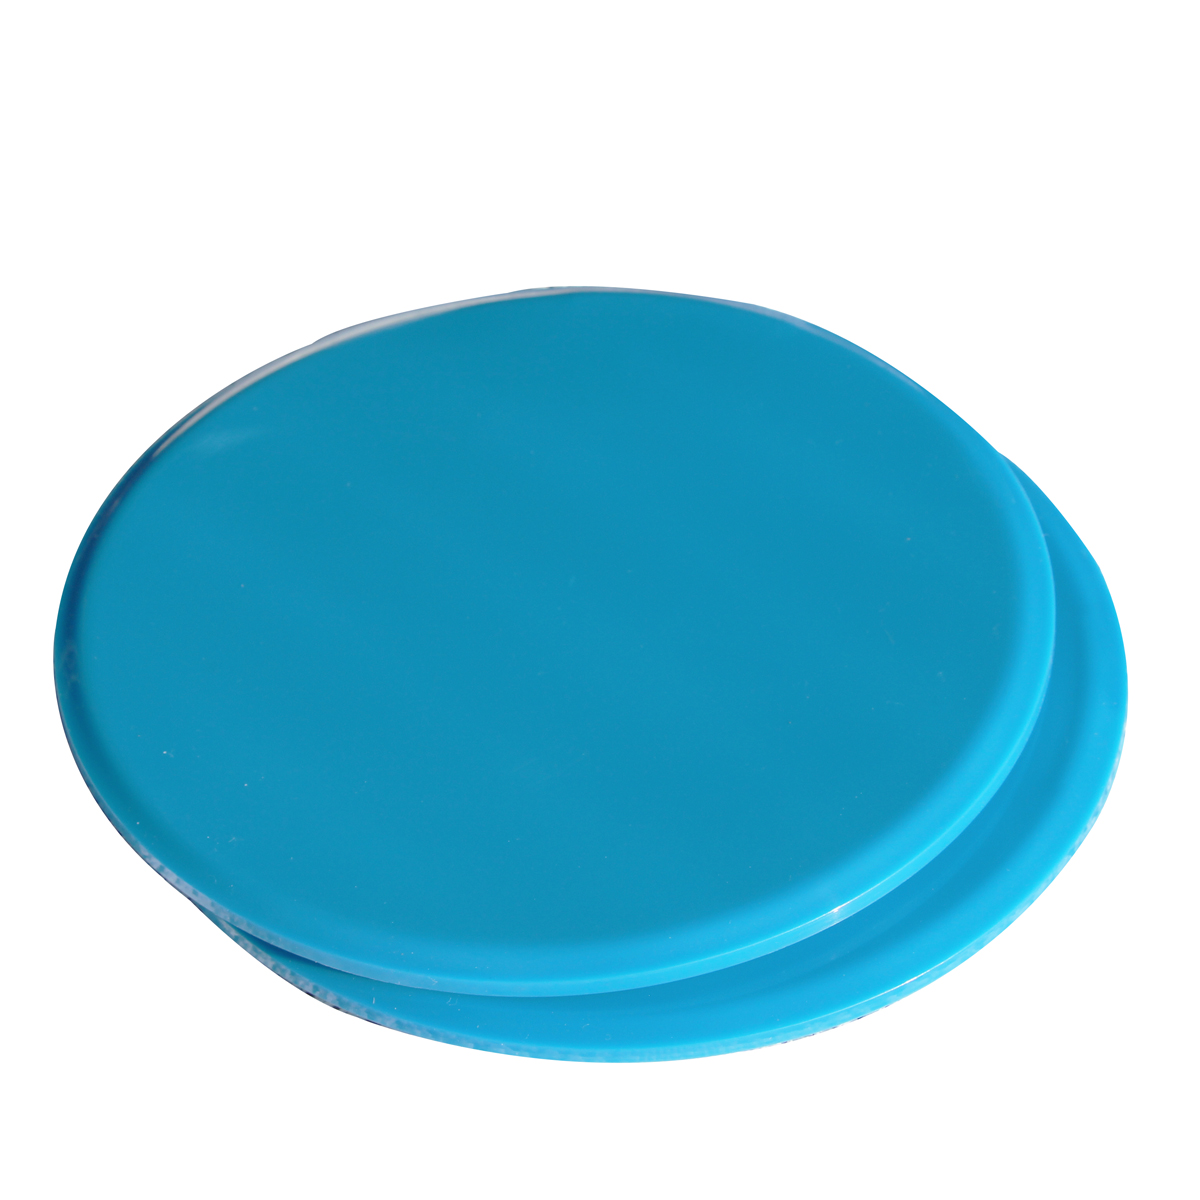 Core Sliders" Discos Deslizantes Para Os Músculos Abdominais Ø 17,5cm (conjunto De 2) | Azul - azul - 